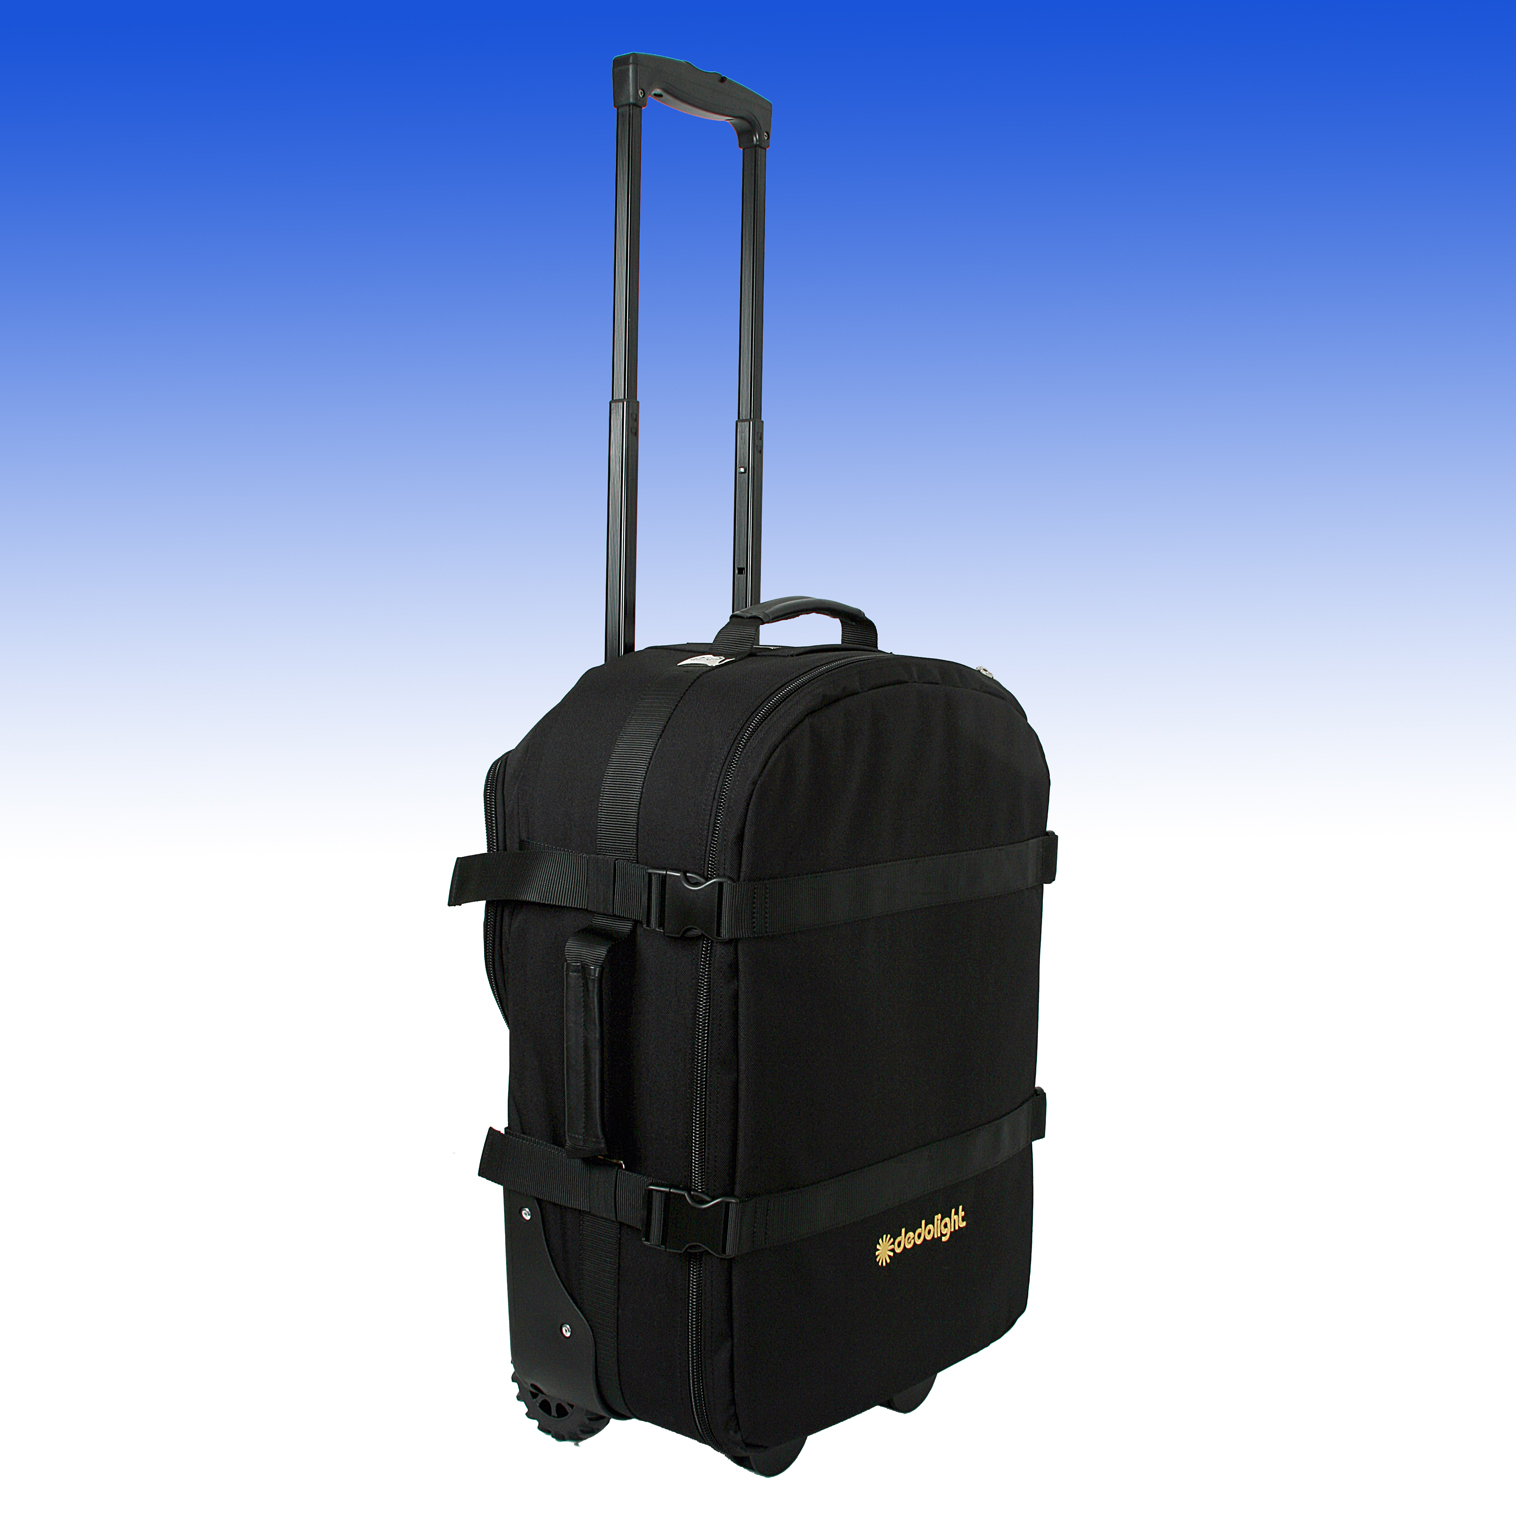 DBPSW Backpack und Trolley / Rollkoffer - 50 % RABATT